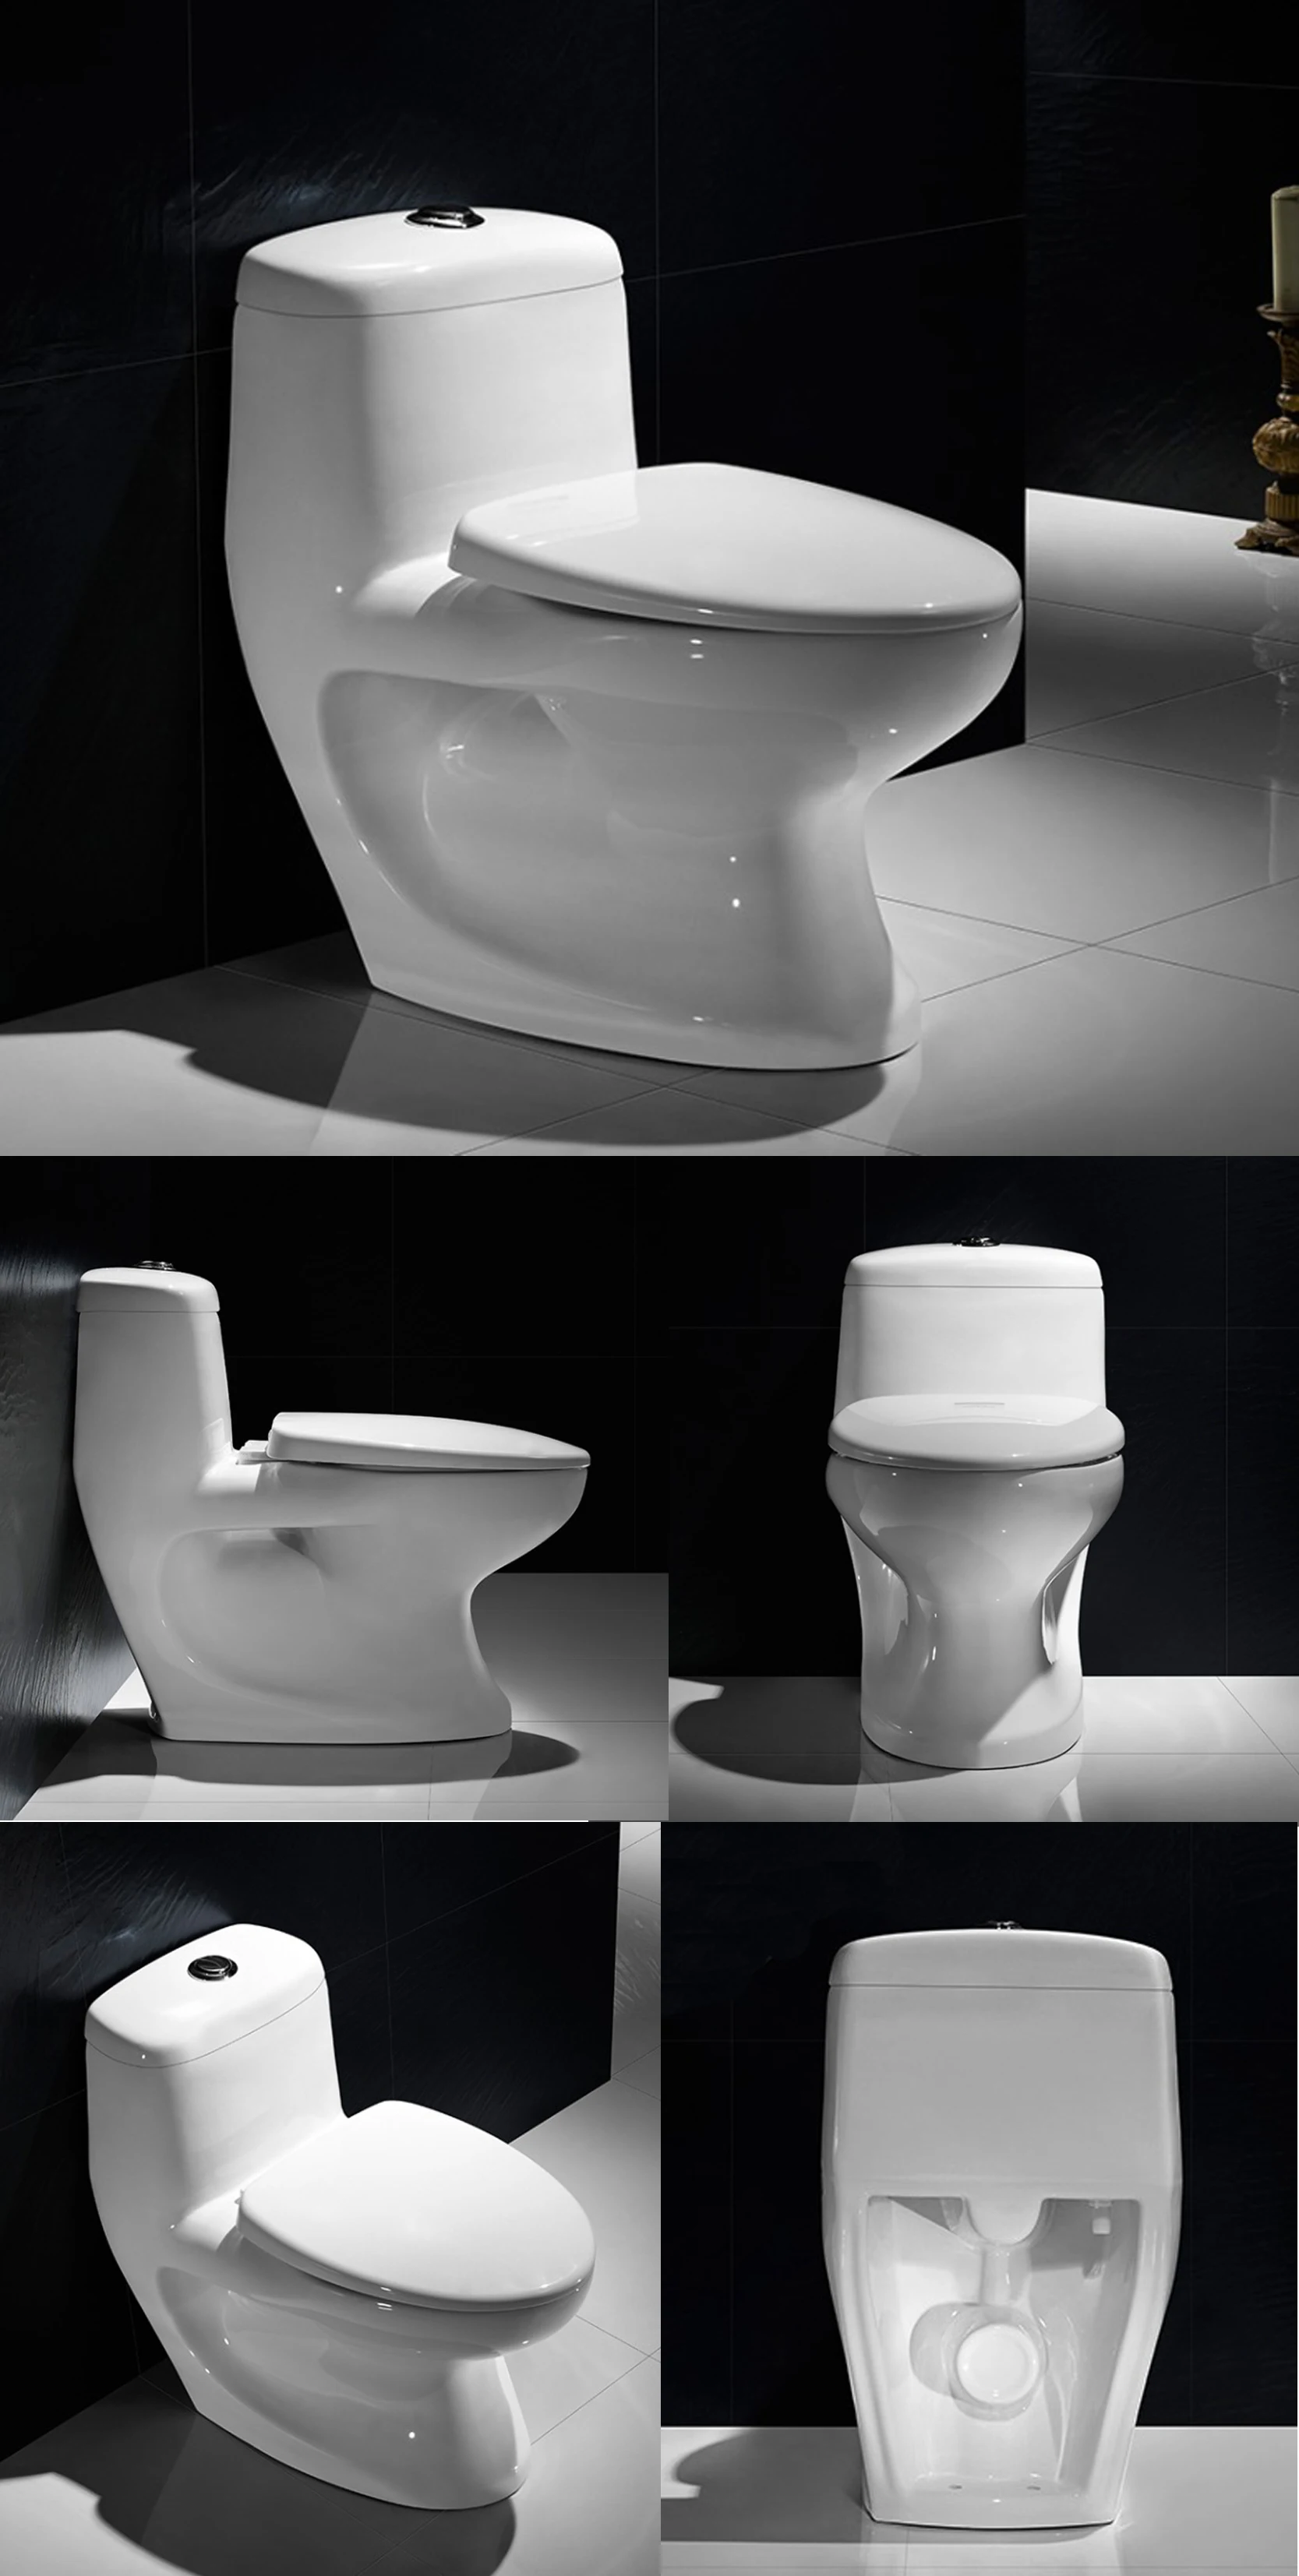 1107 High End European Court Style Retro Design Bathroom One Piece Washdown Toilet